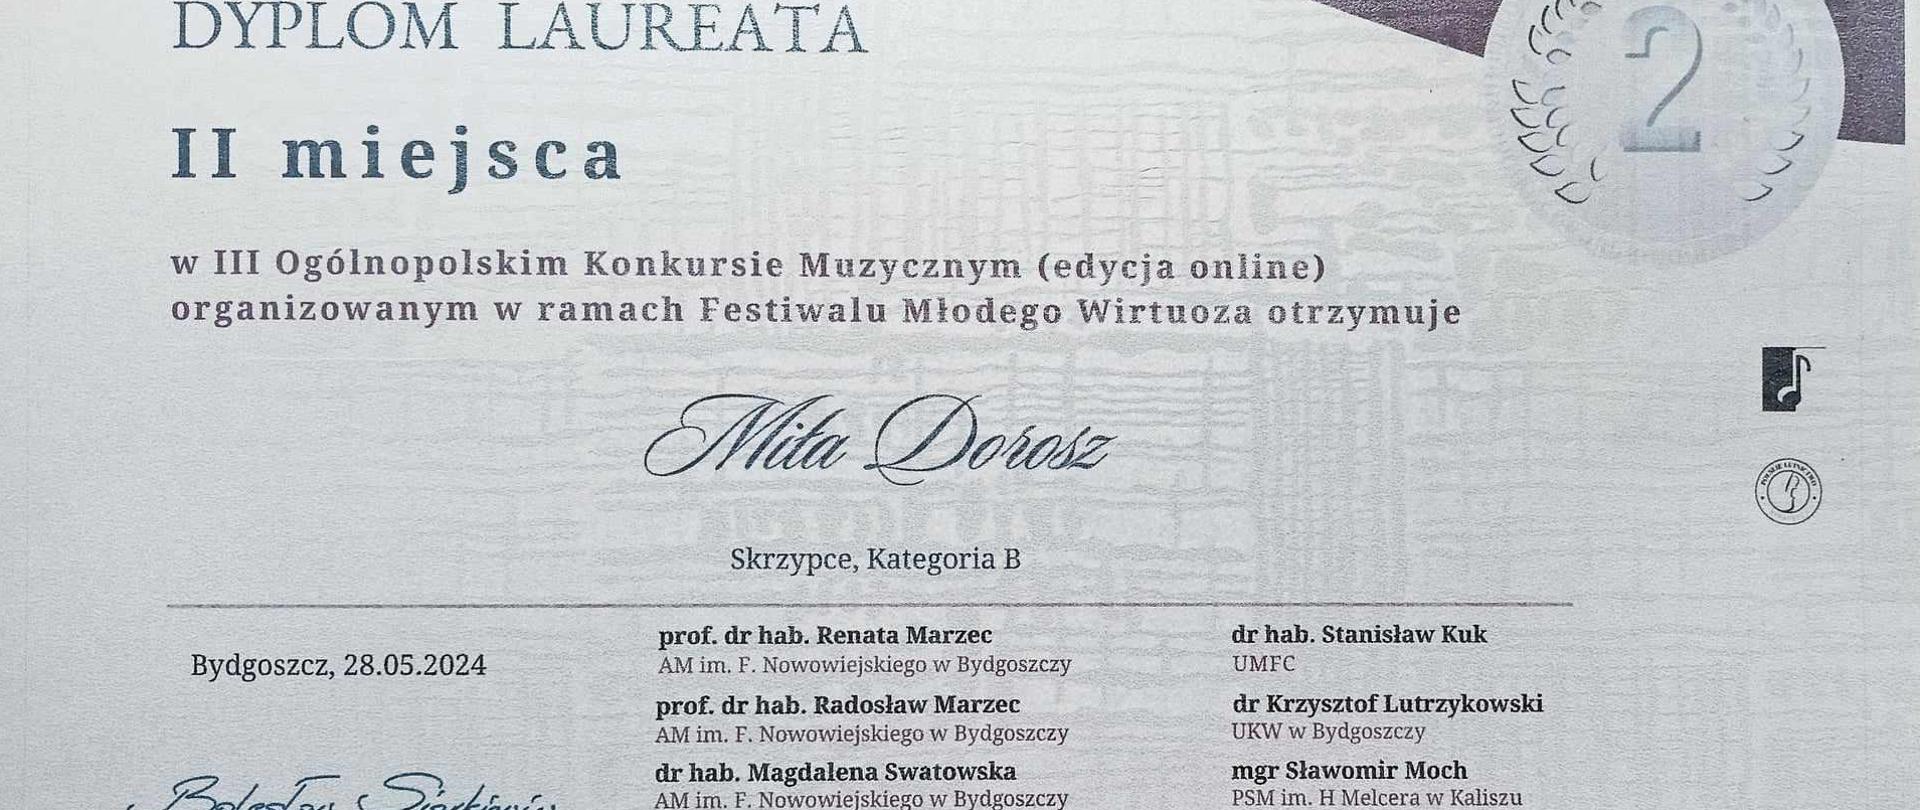 Miła Dorosz - dyplom